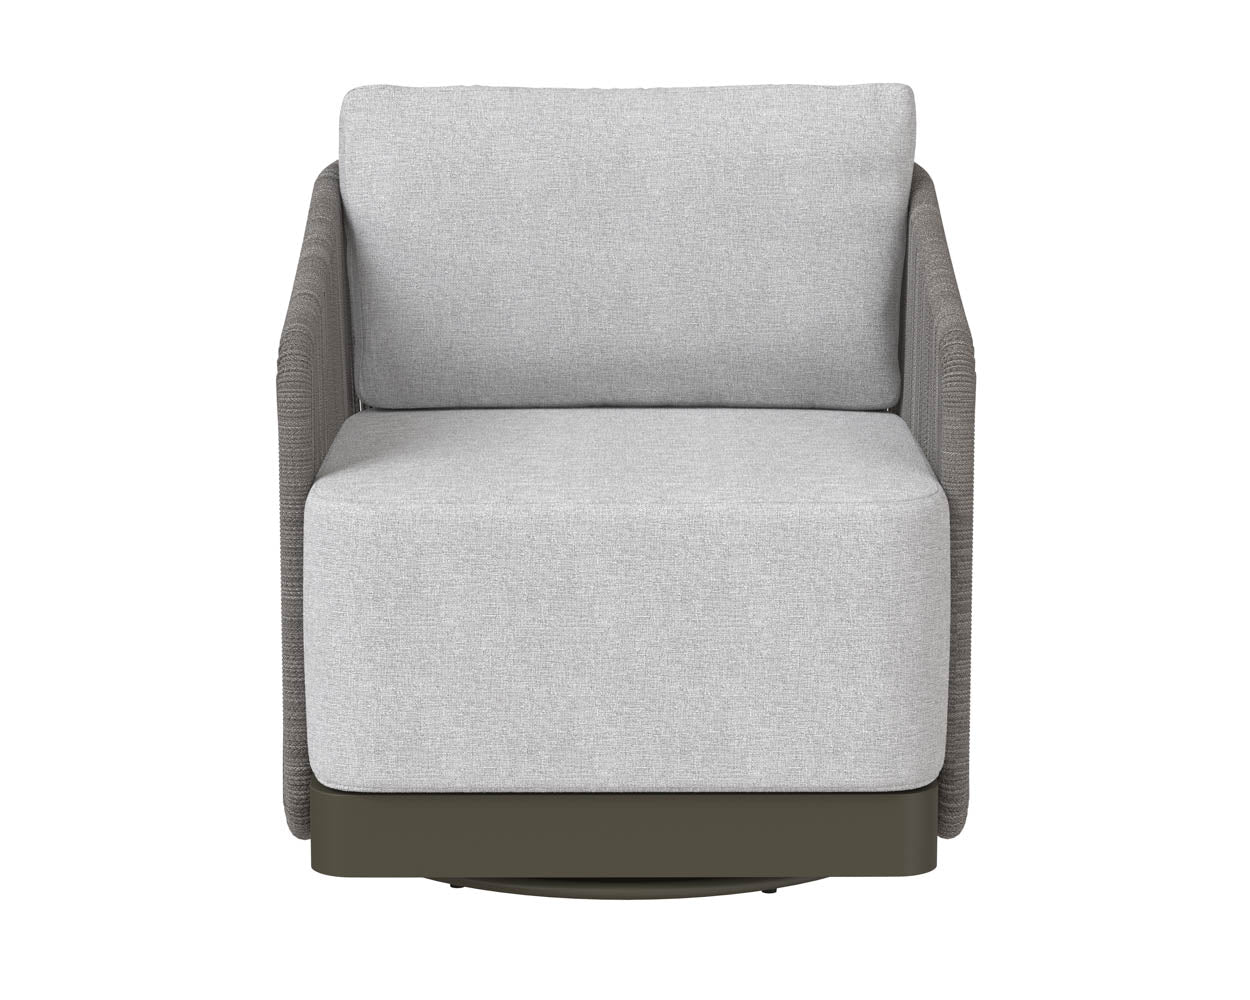 SUNPAN Outdoor Chairs - Allariz Swivel Armchair - Warm Grey - Gracebay Light Grey